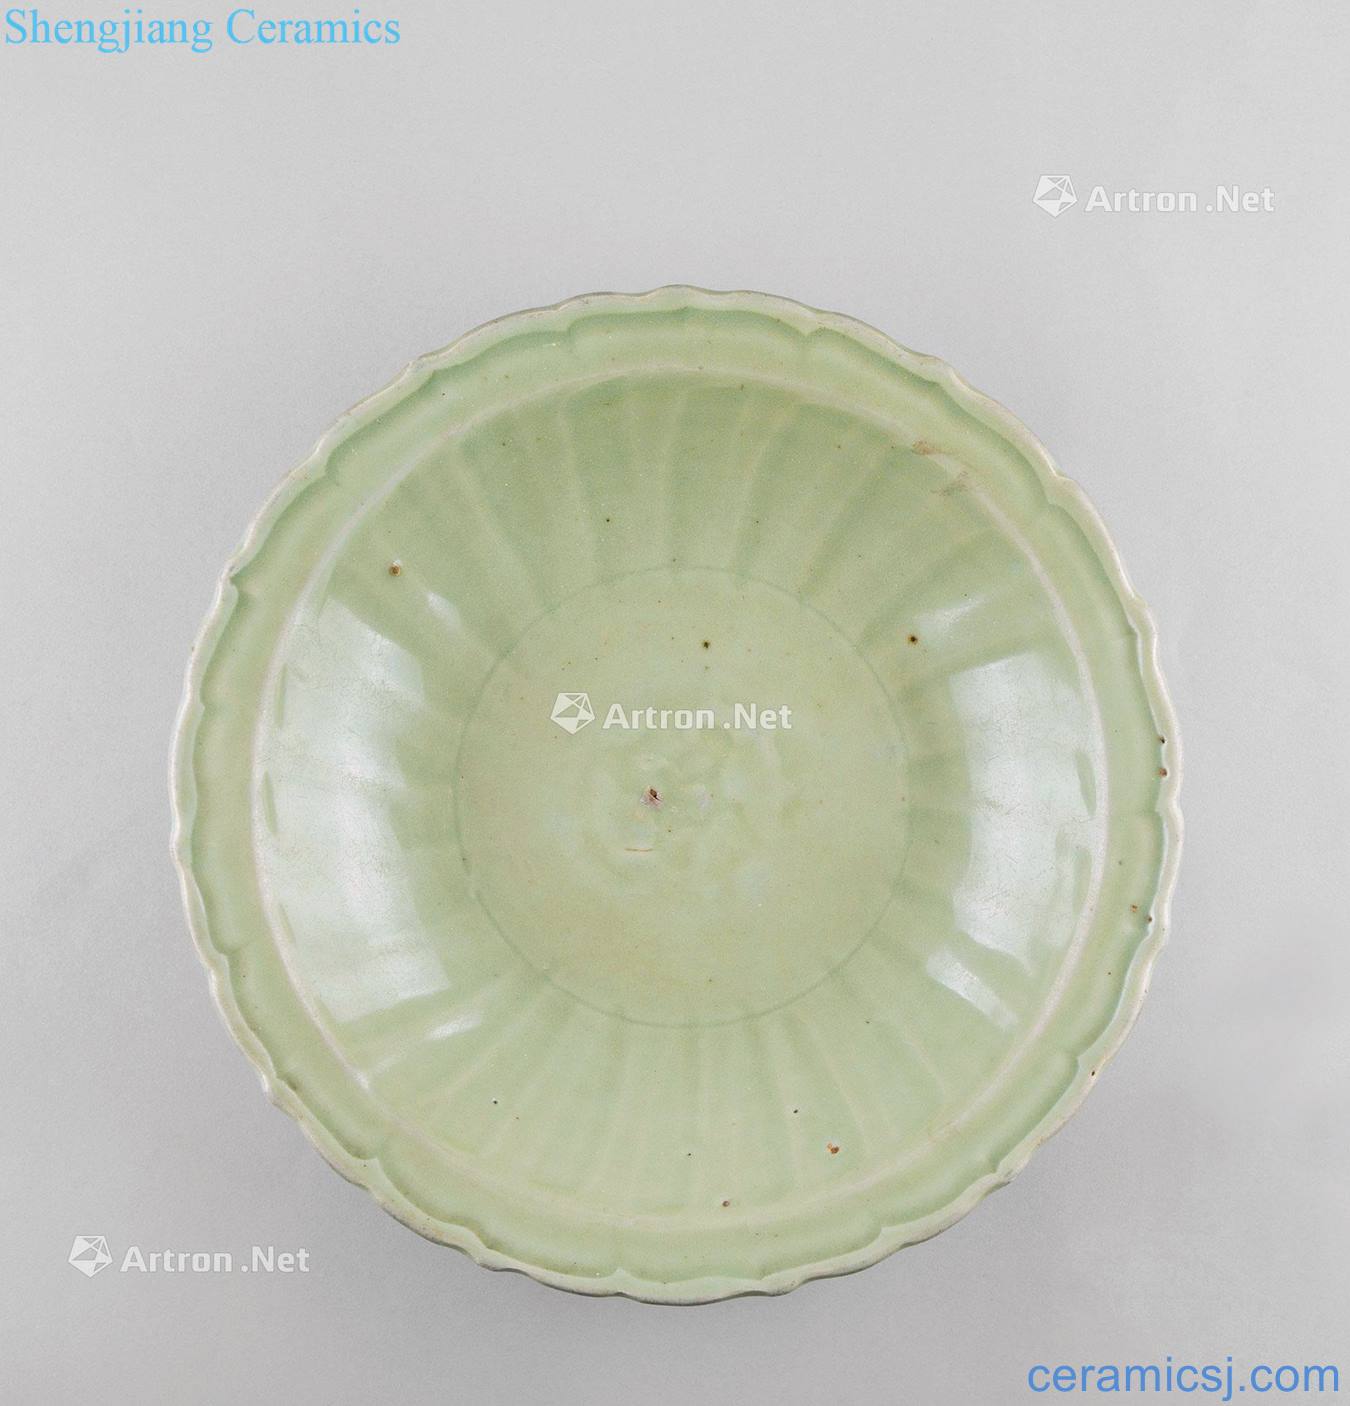 The yuan dynasty Longquan celadon flower disc